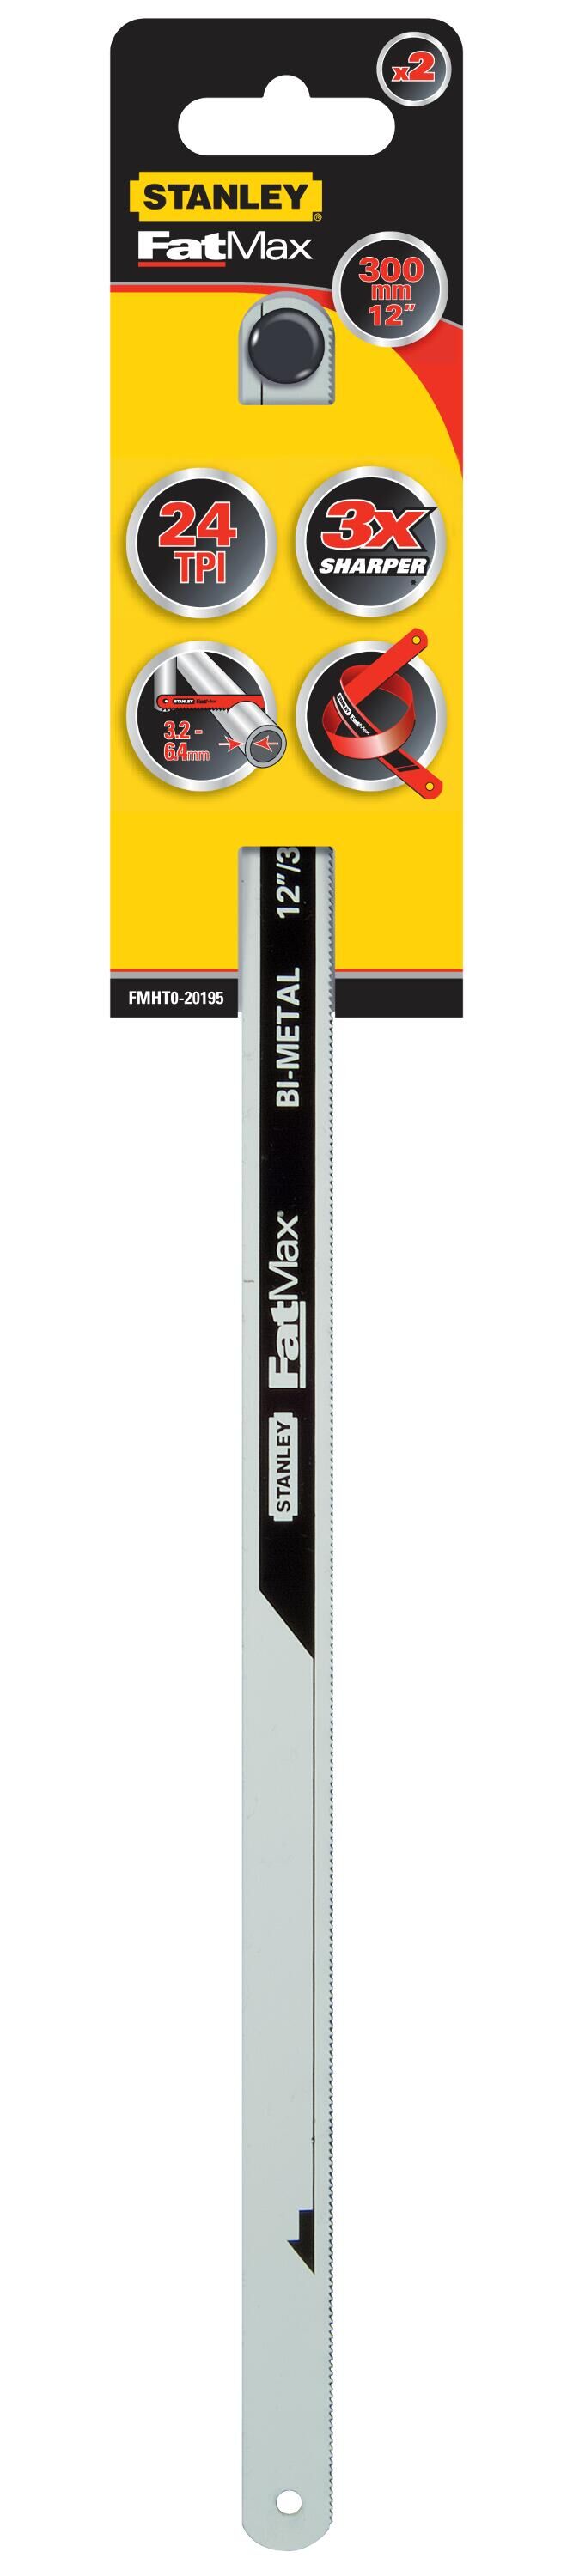 Lames de cutter 25 mm - carte de 5 lames - Fatmax - STANLEY FATMAX